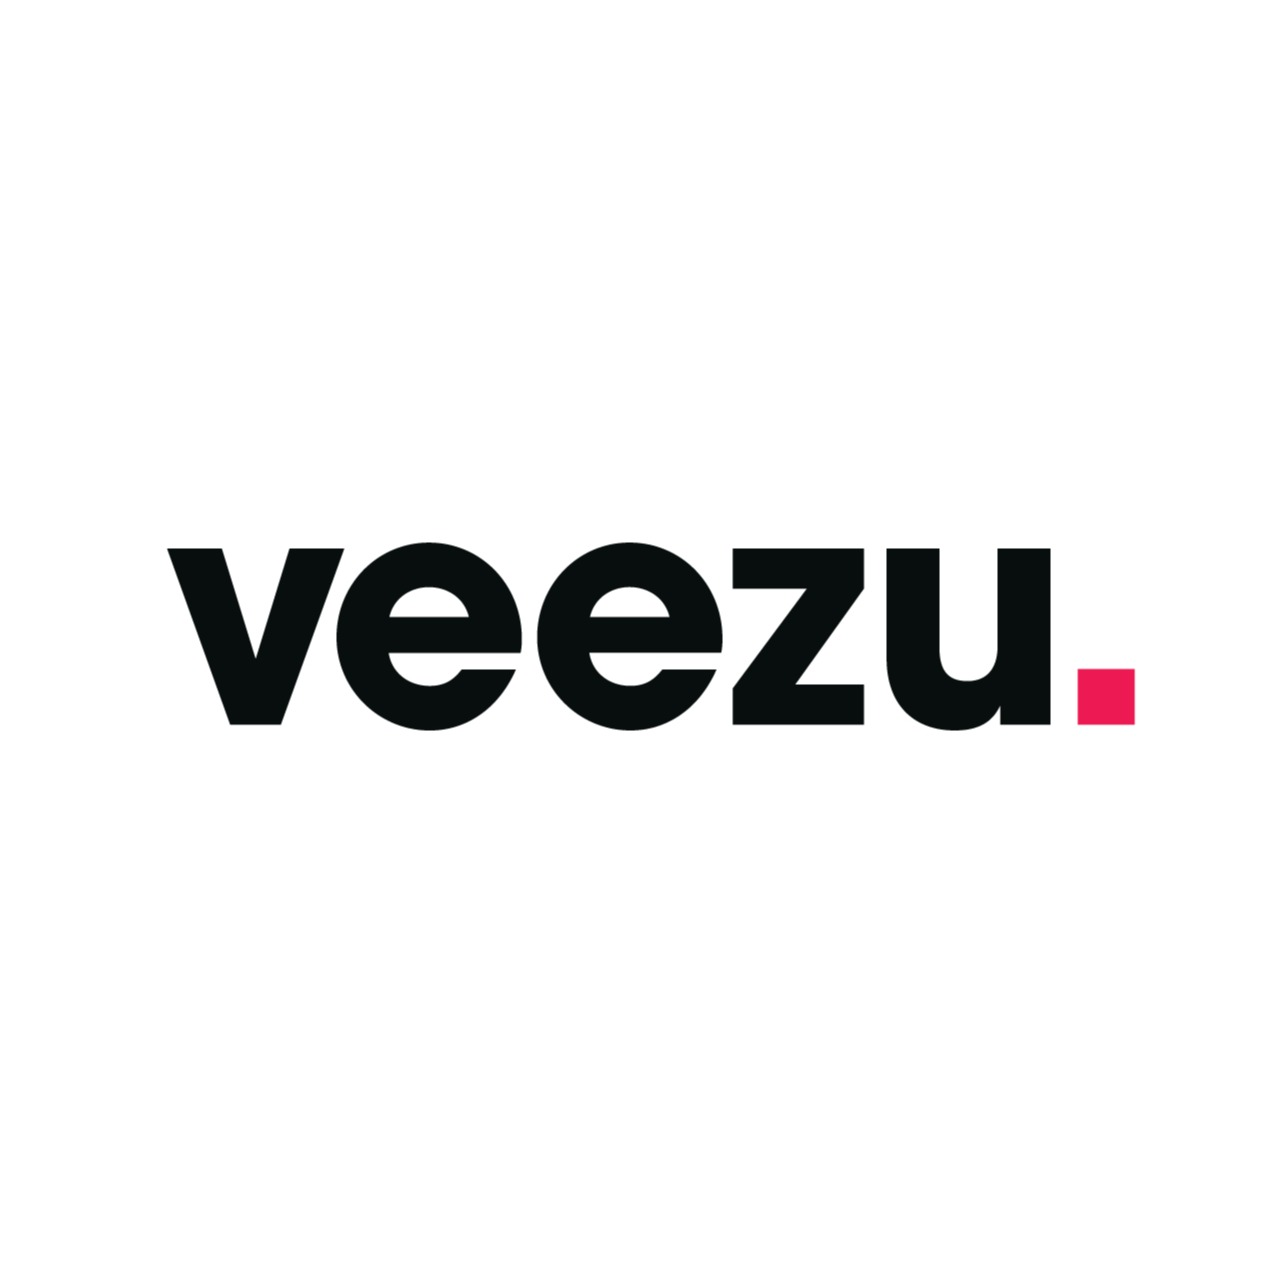 Veezu Business, Sales and Marketing Employer Skills Academy